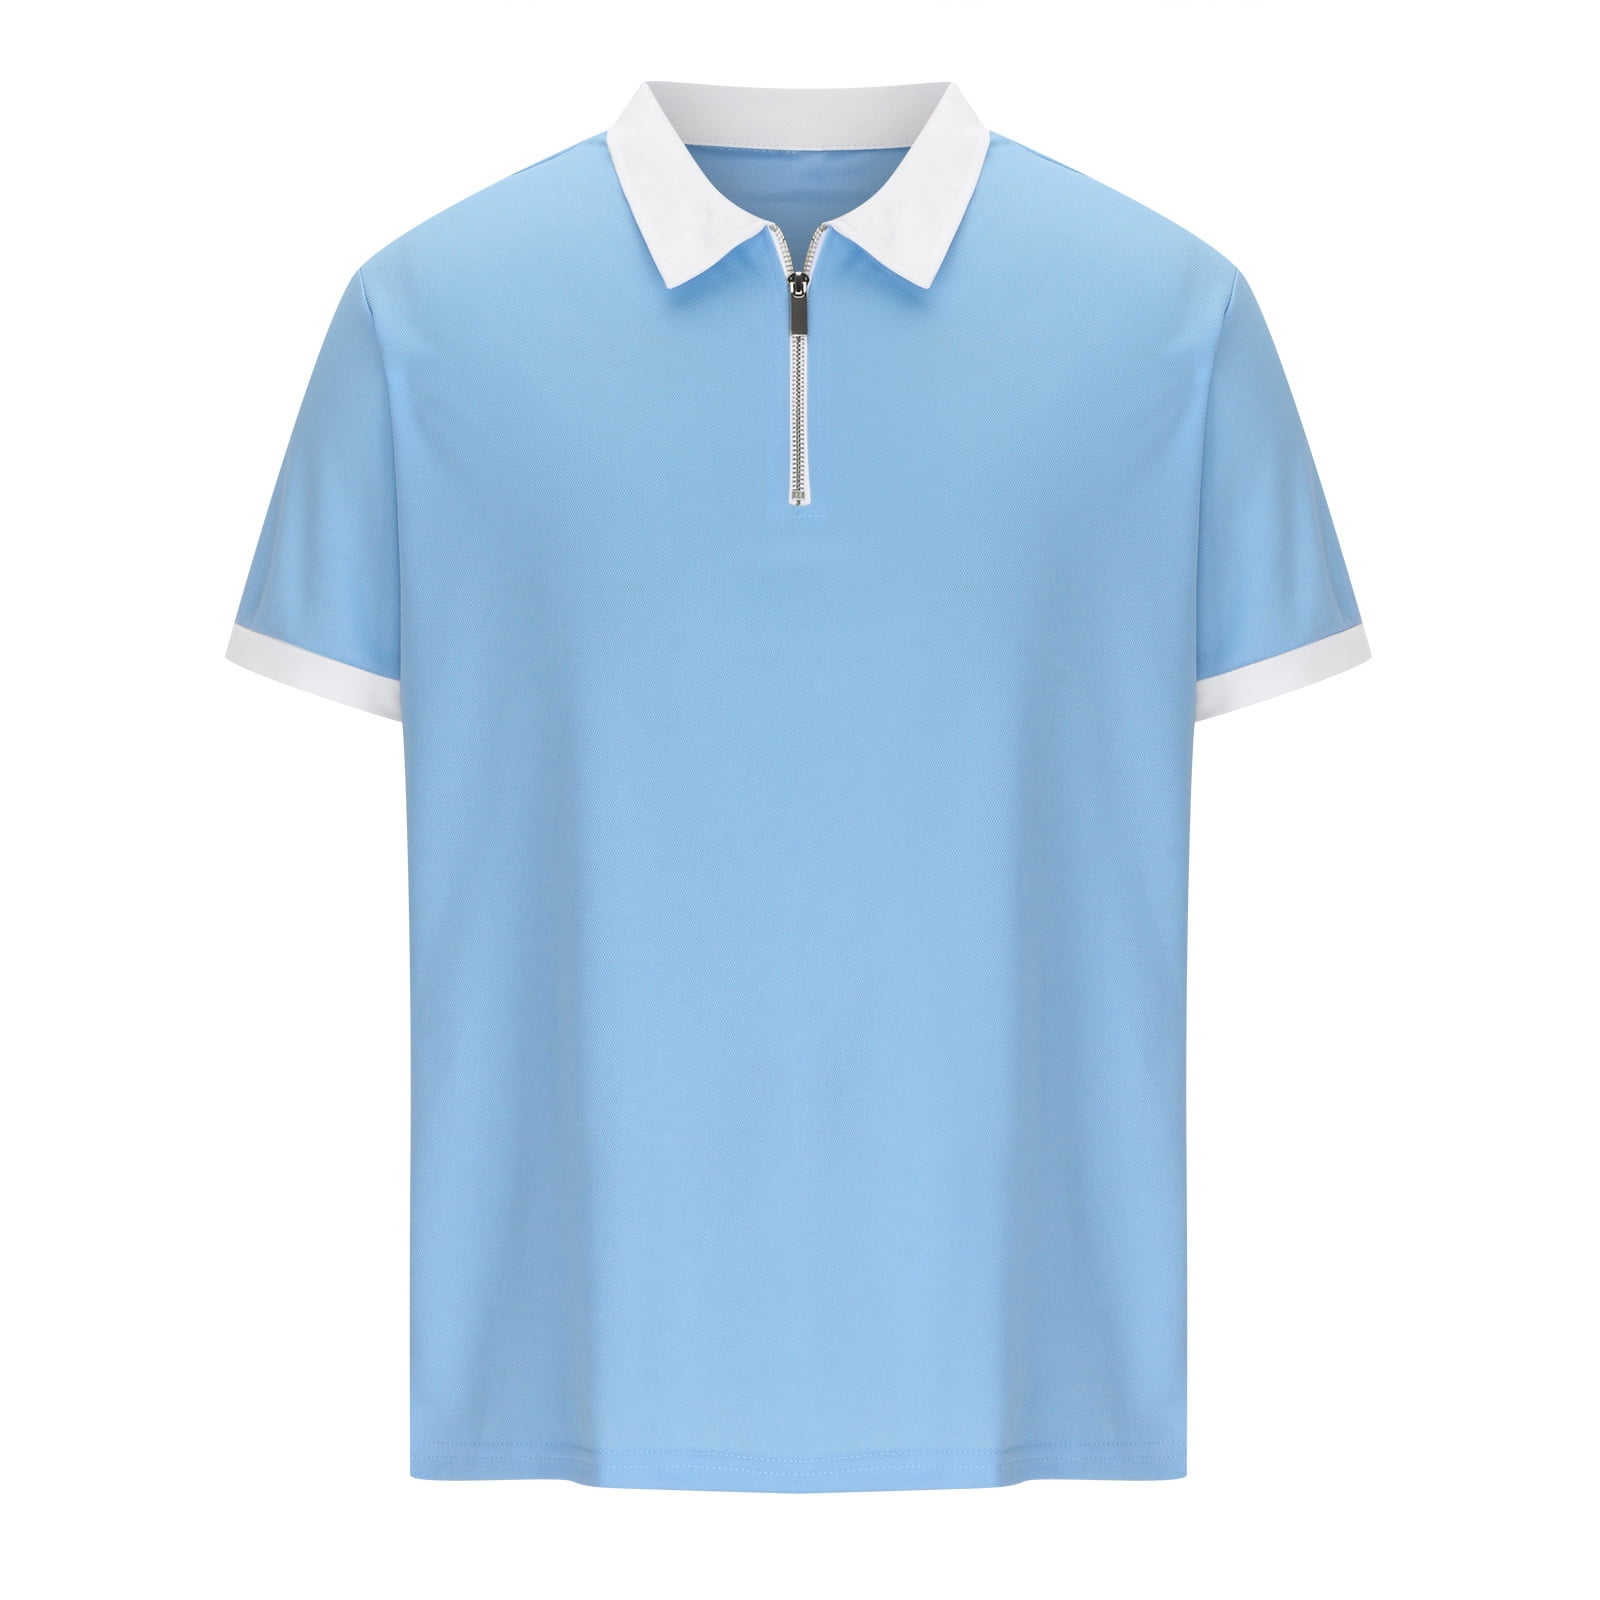 YYDGH Men\'s Zipper XXXL Blue T Shirt Sleeve Classic Shirts Polo Polo Short Knit Casual Fit Shirt